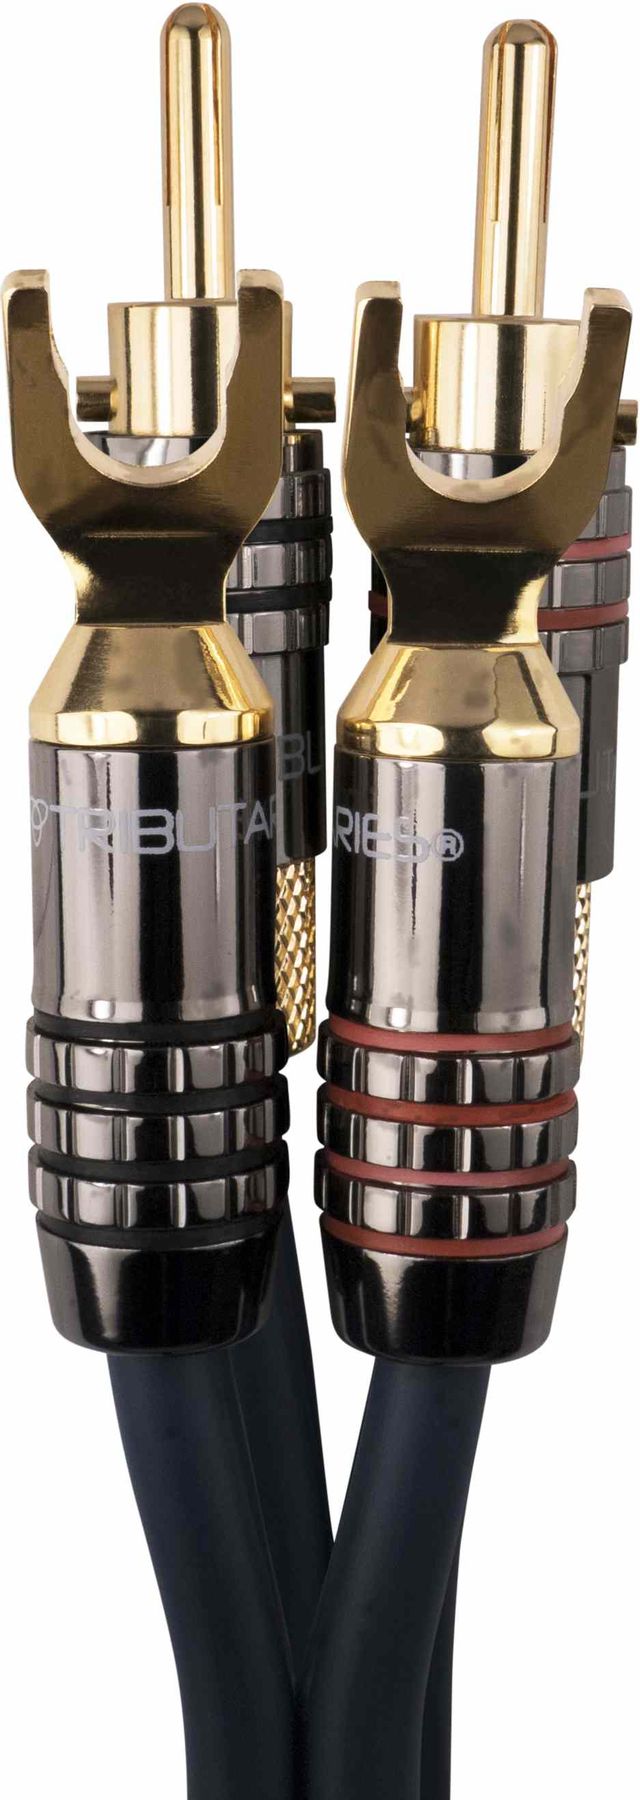 Tributaries® Serires 8 12 Ft. Banana Plugs/Spade Lugs Speaker Cable